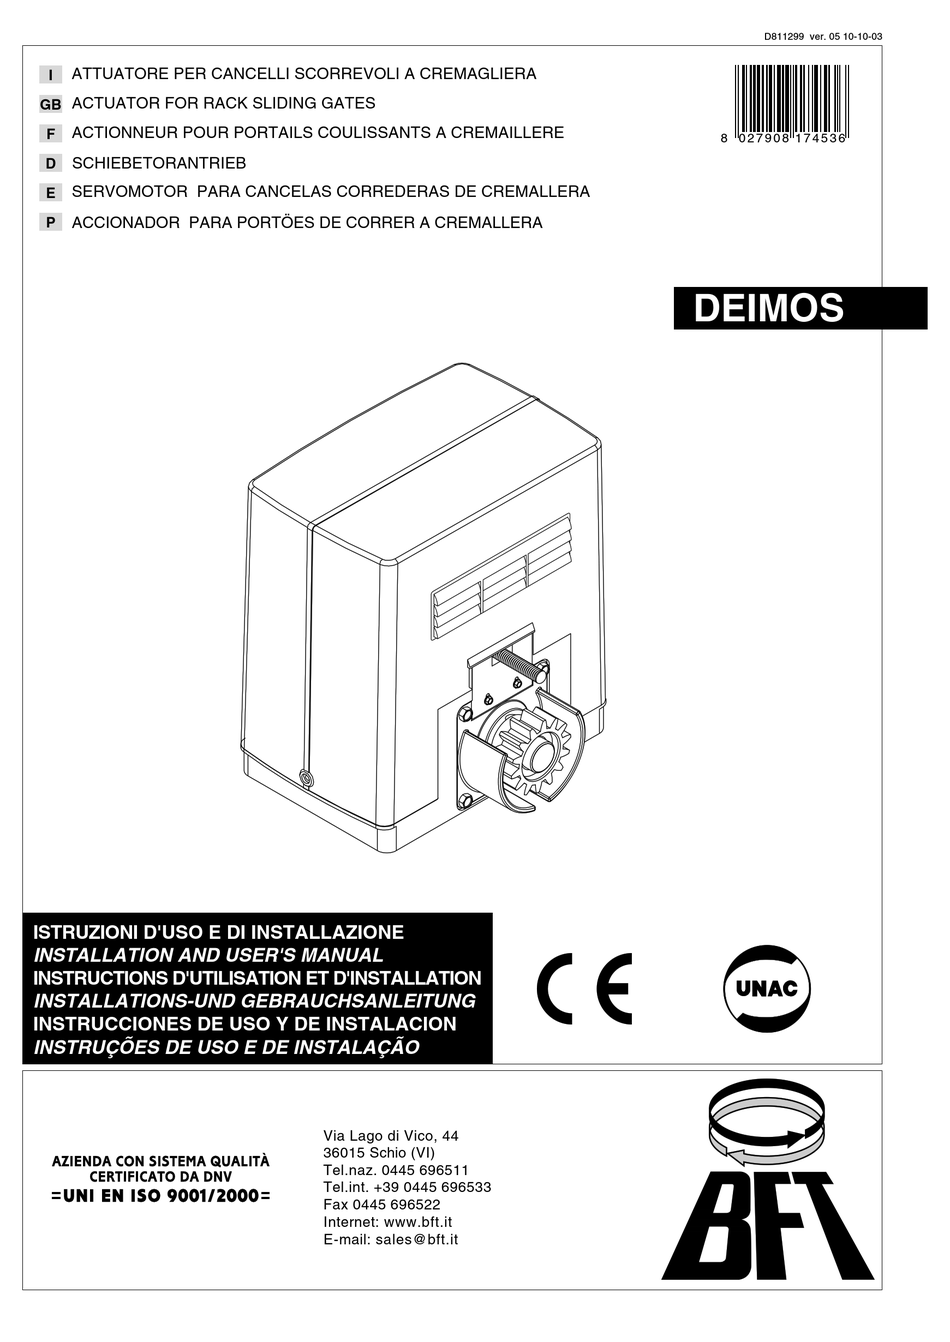 DEIMOS D811299 INSTALLATION AND USER MANUAL Pdf Download | ManualsLib